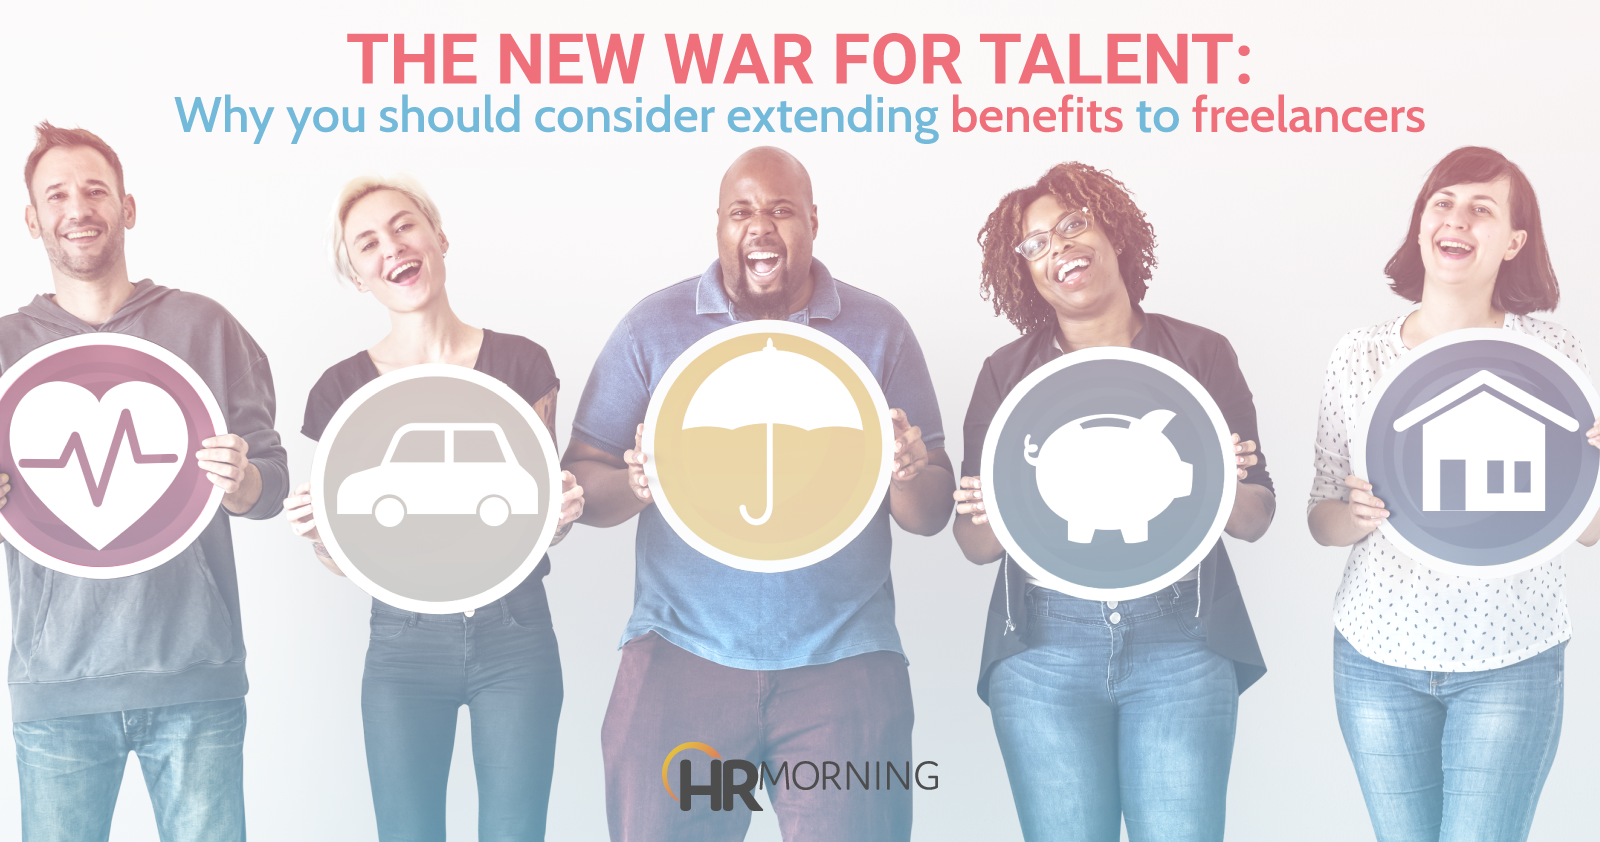 war talent benefits freelancers